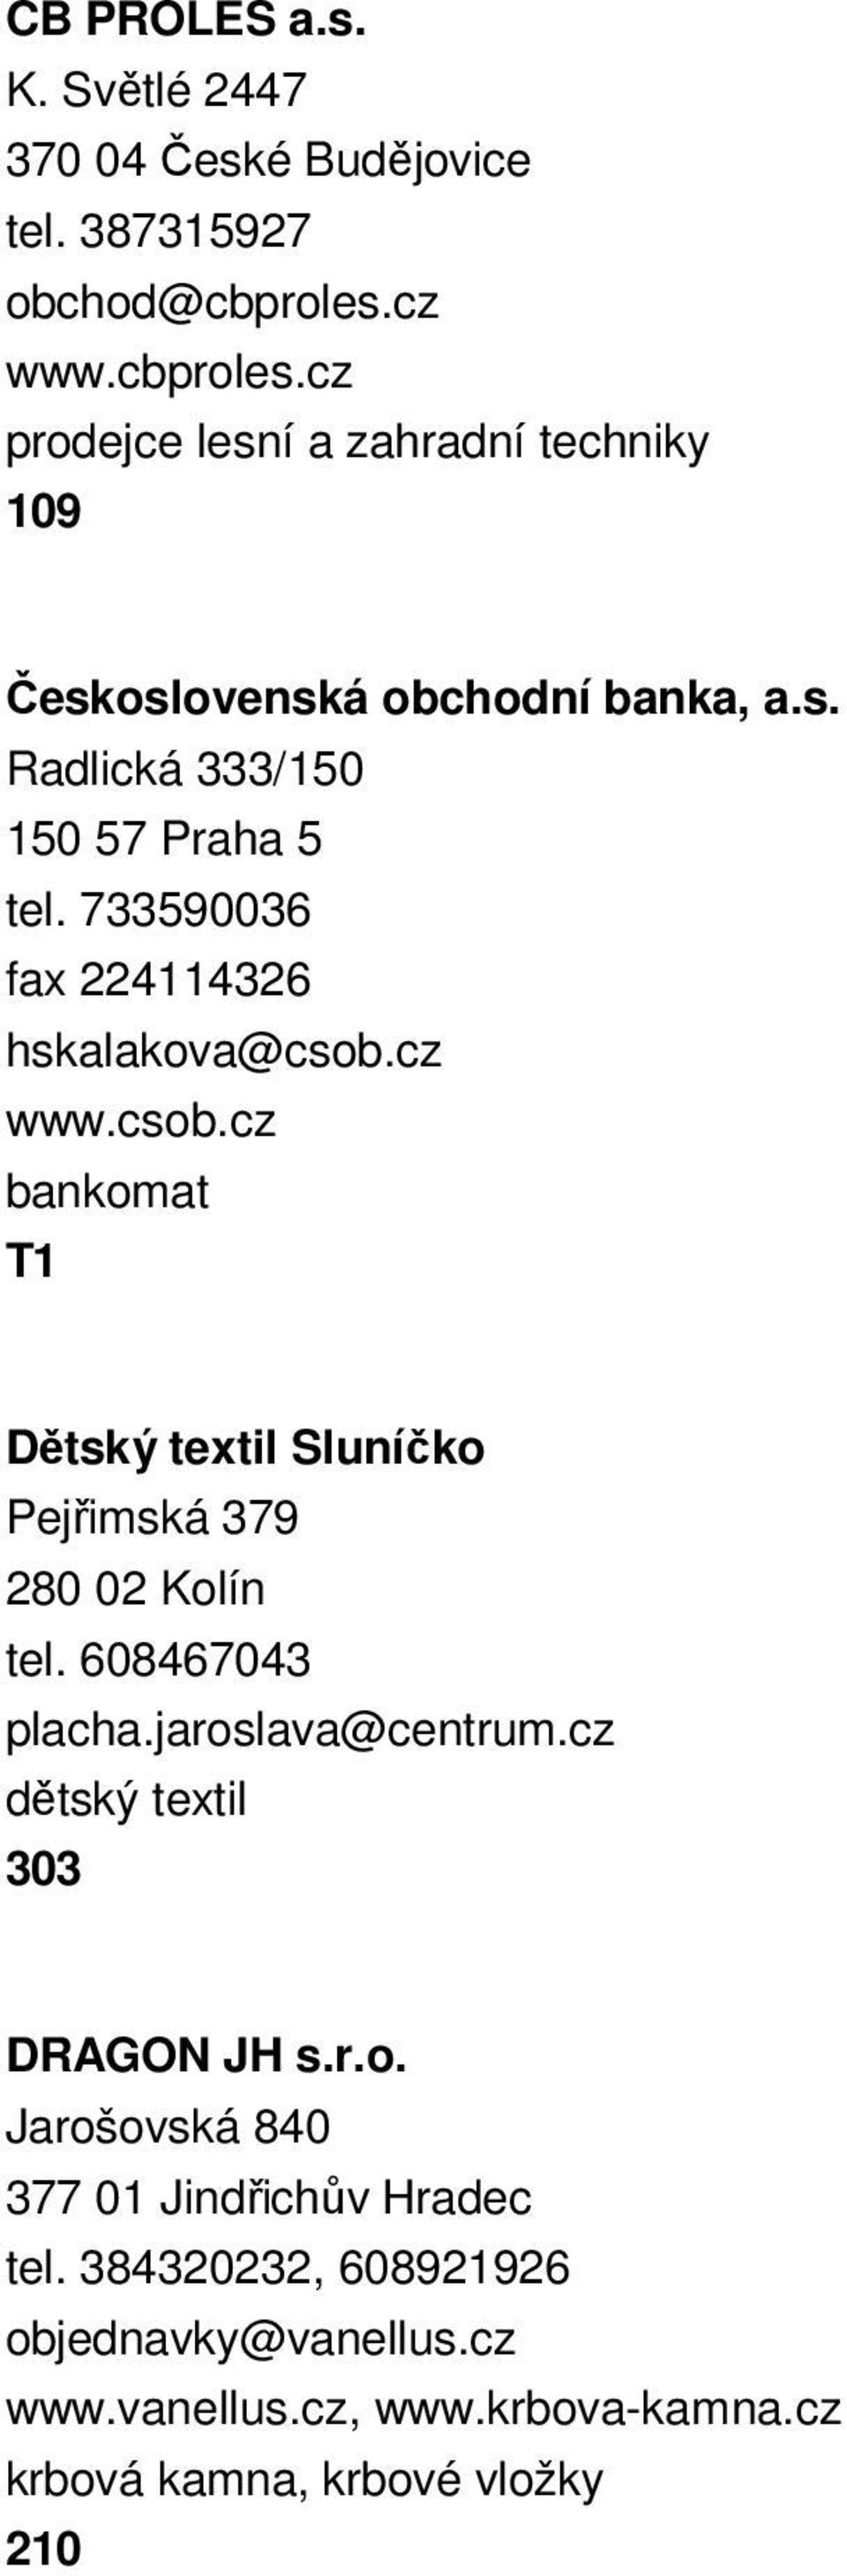 733590036 fax 224114326 hskalakova@csob.cz www.csob.cz bankomat Dětský textil Sluníčko Pejřimská 379 280 02 Kolín tel. 608467043 placha.